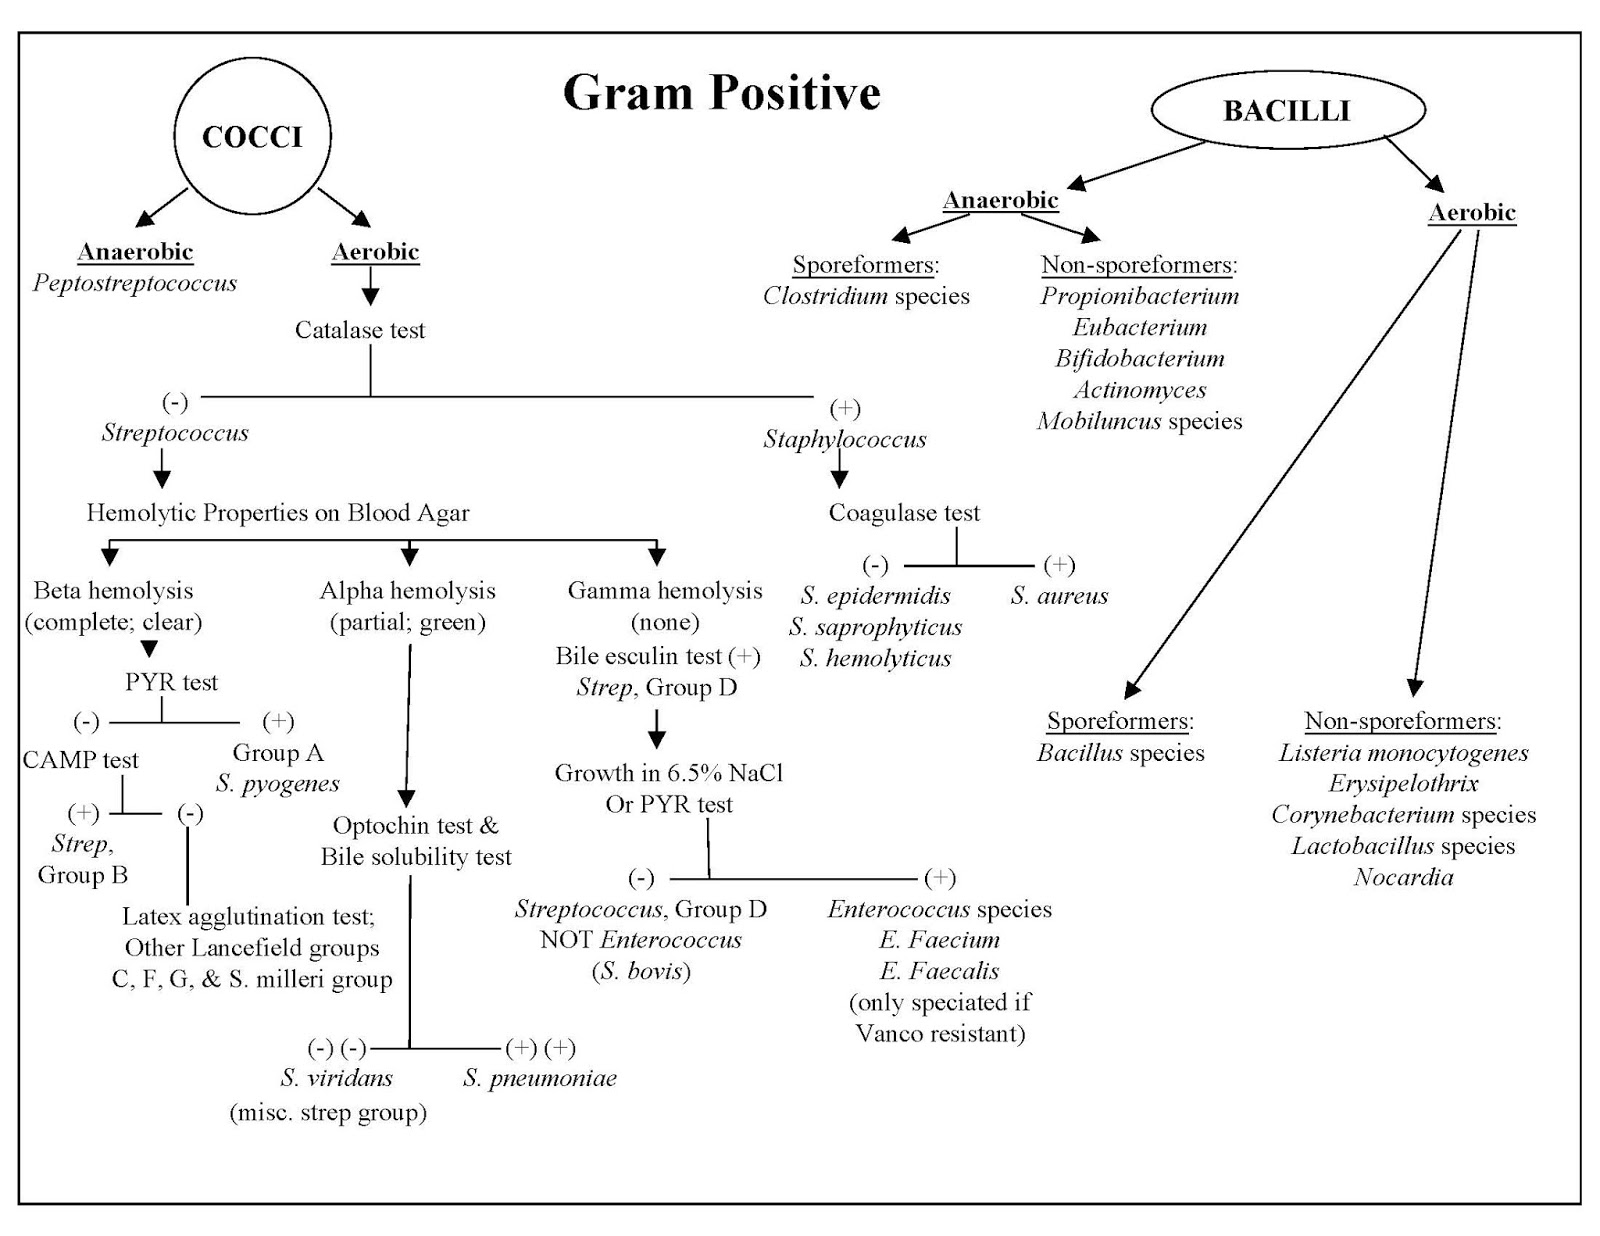 Gram Positive Identification Chart